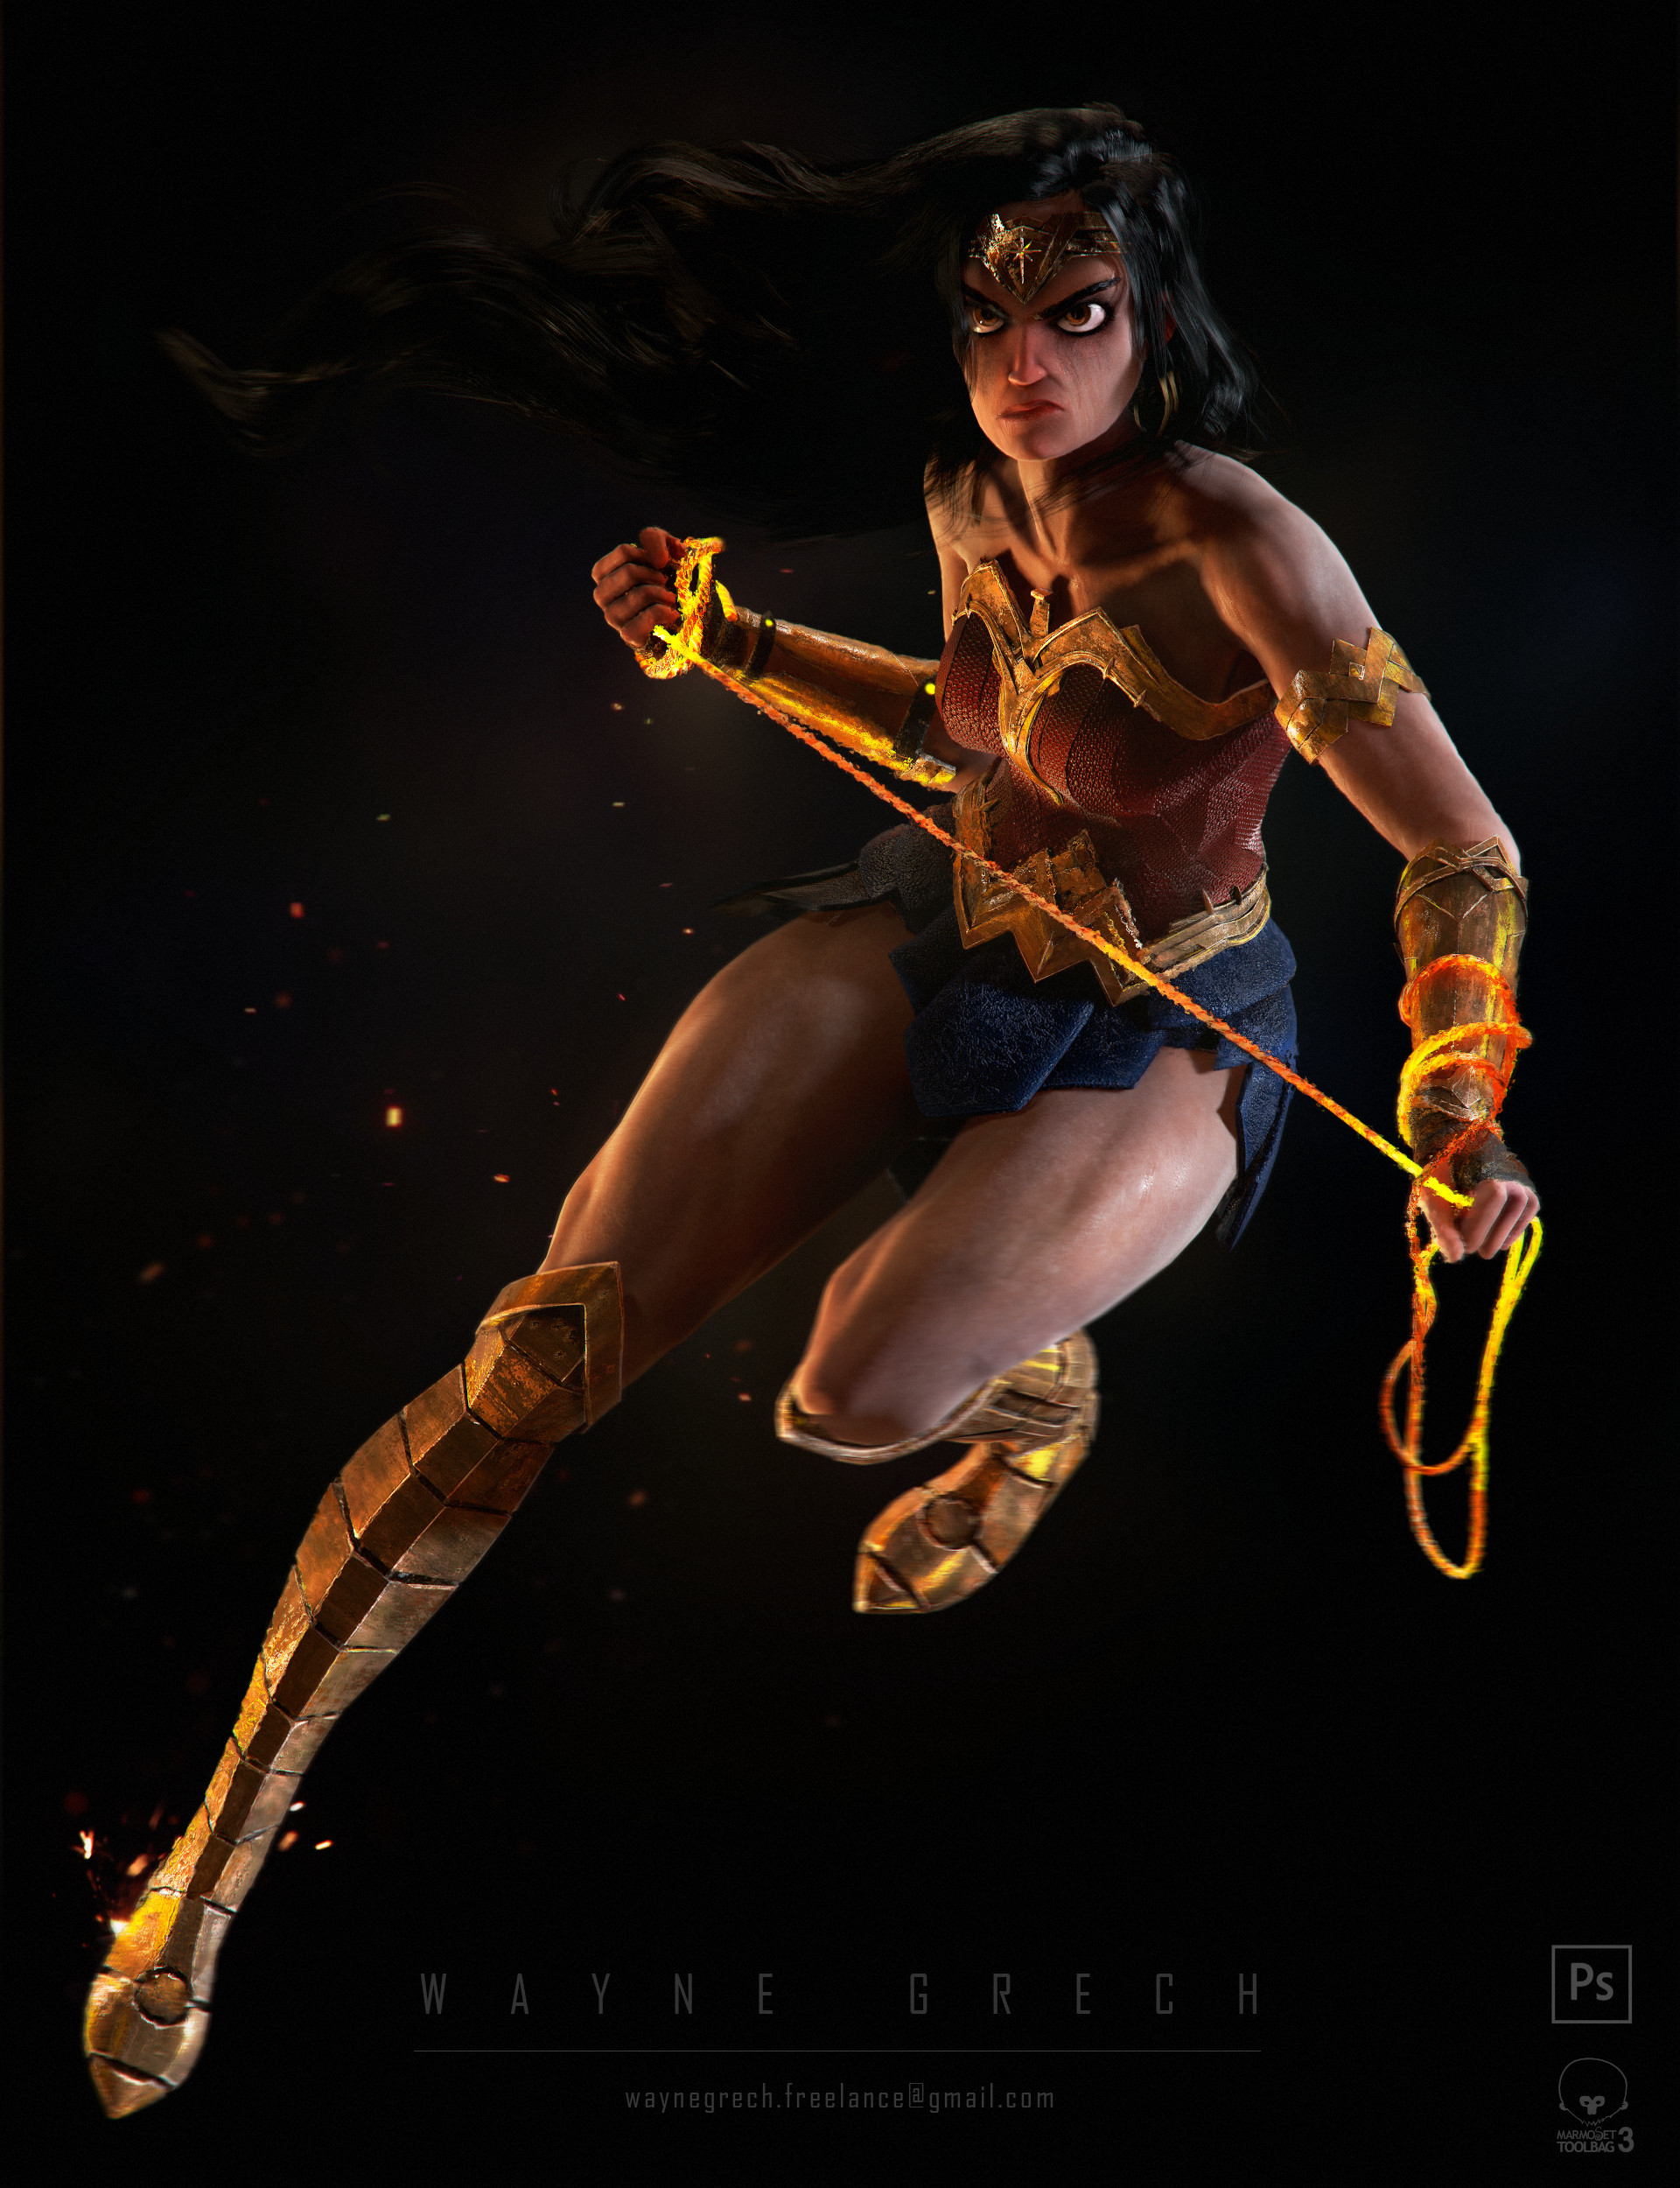 Wayne Grech - Wonder Woman Game Character